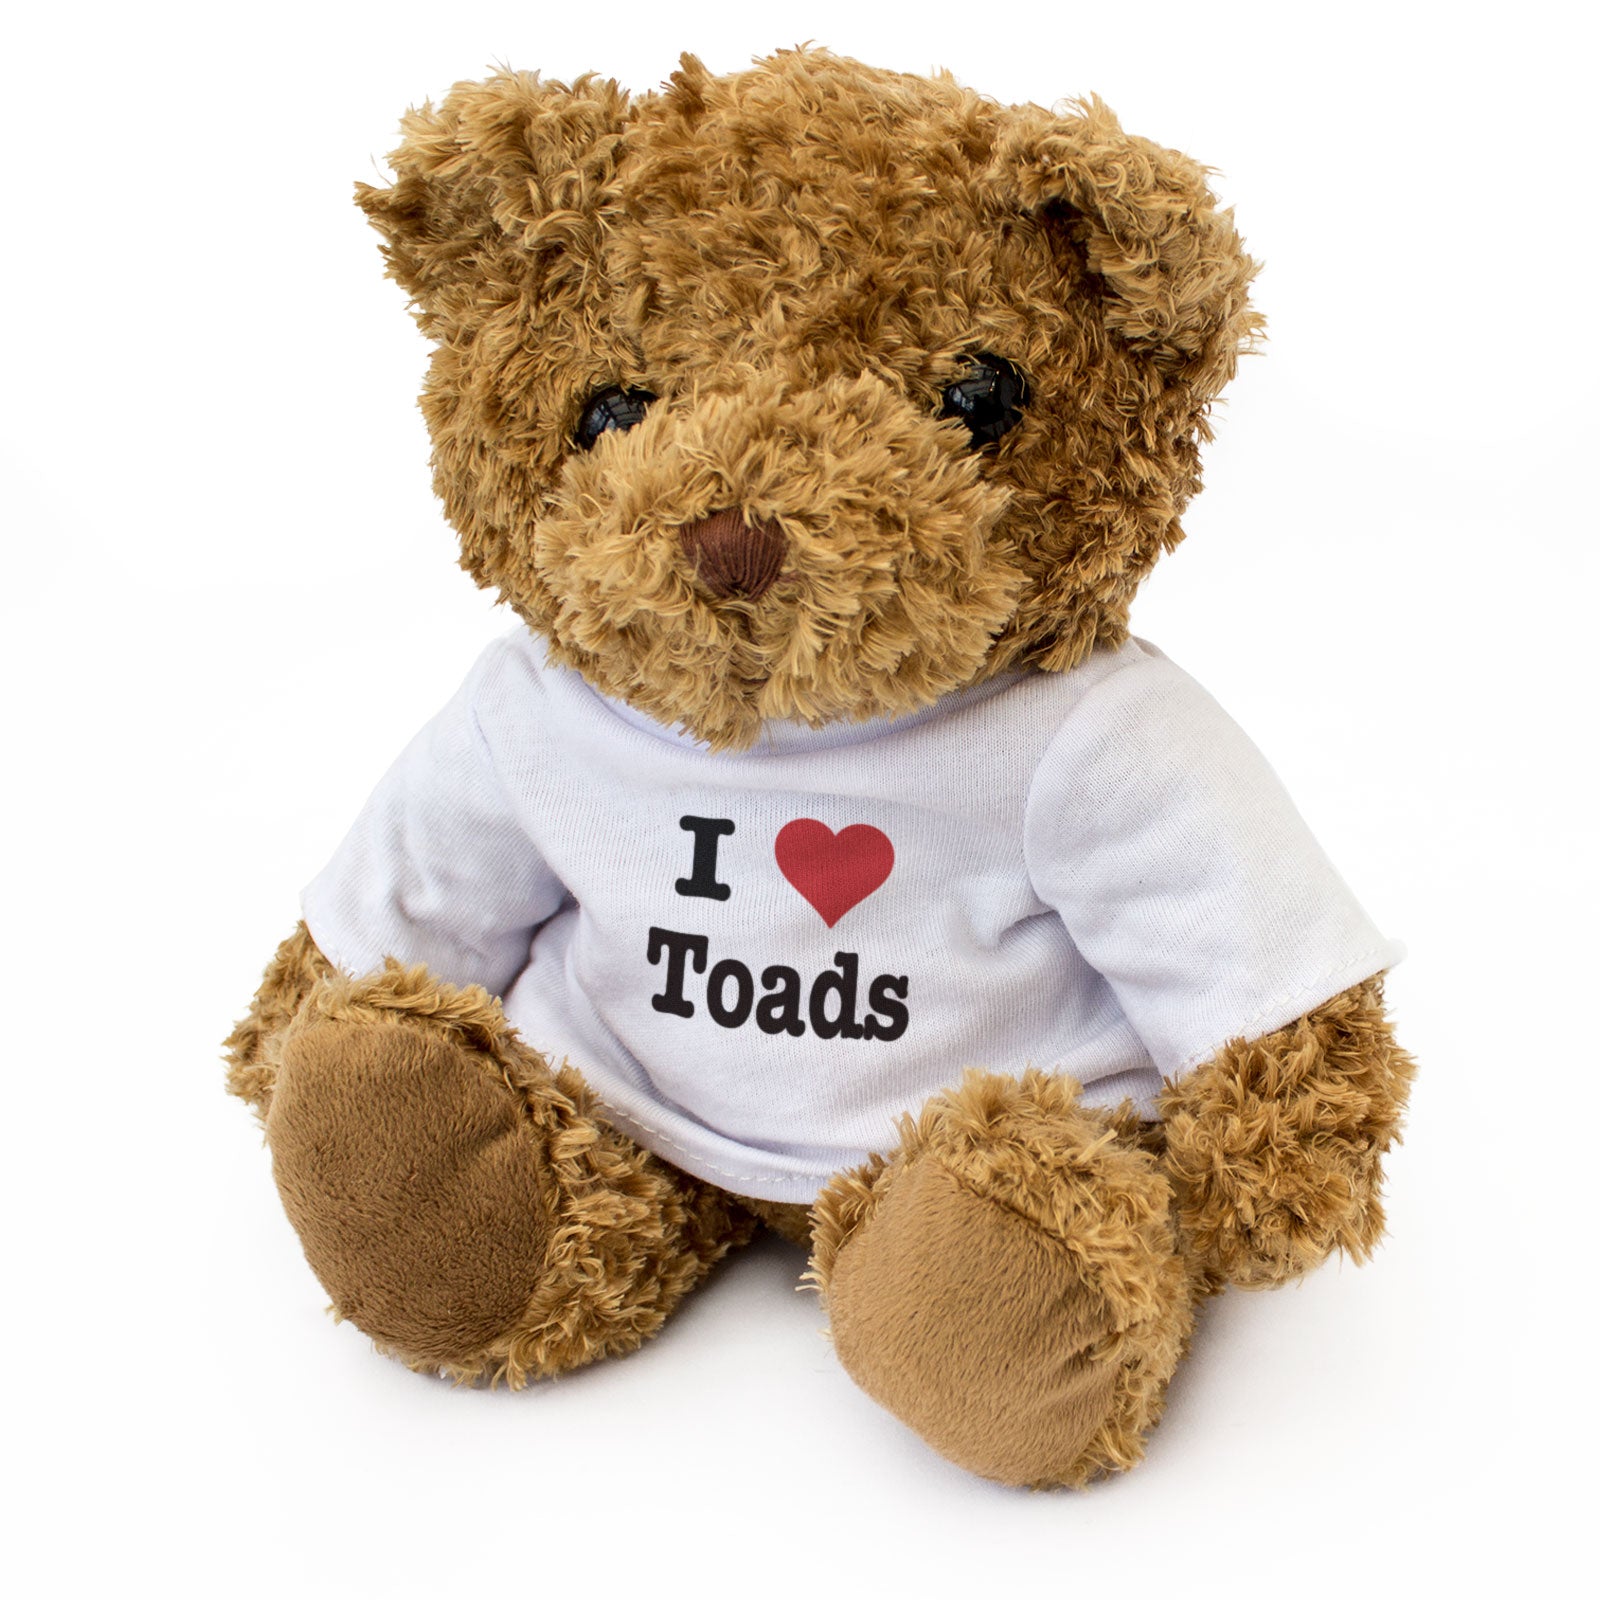 I Love Toads - Teddy Bear